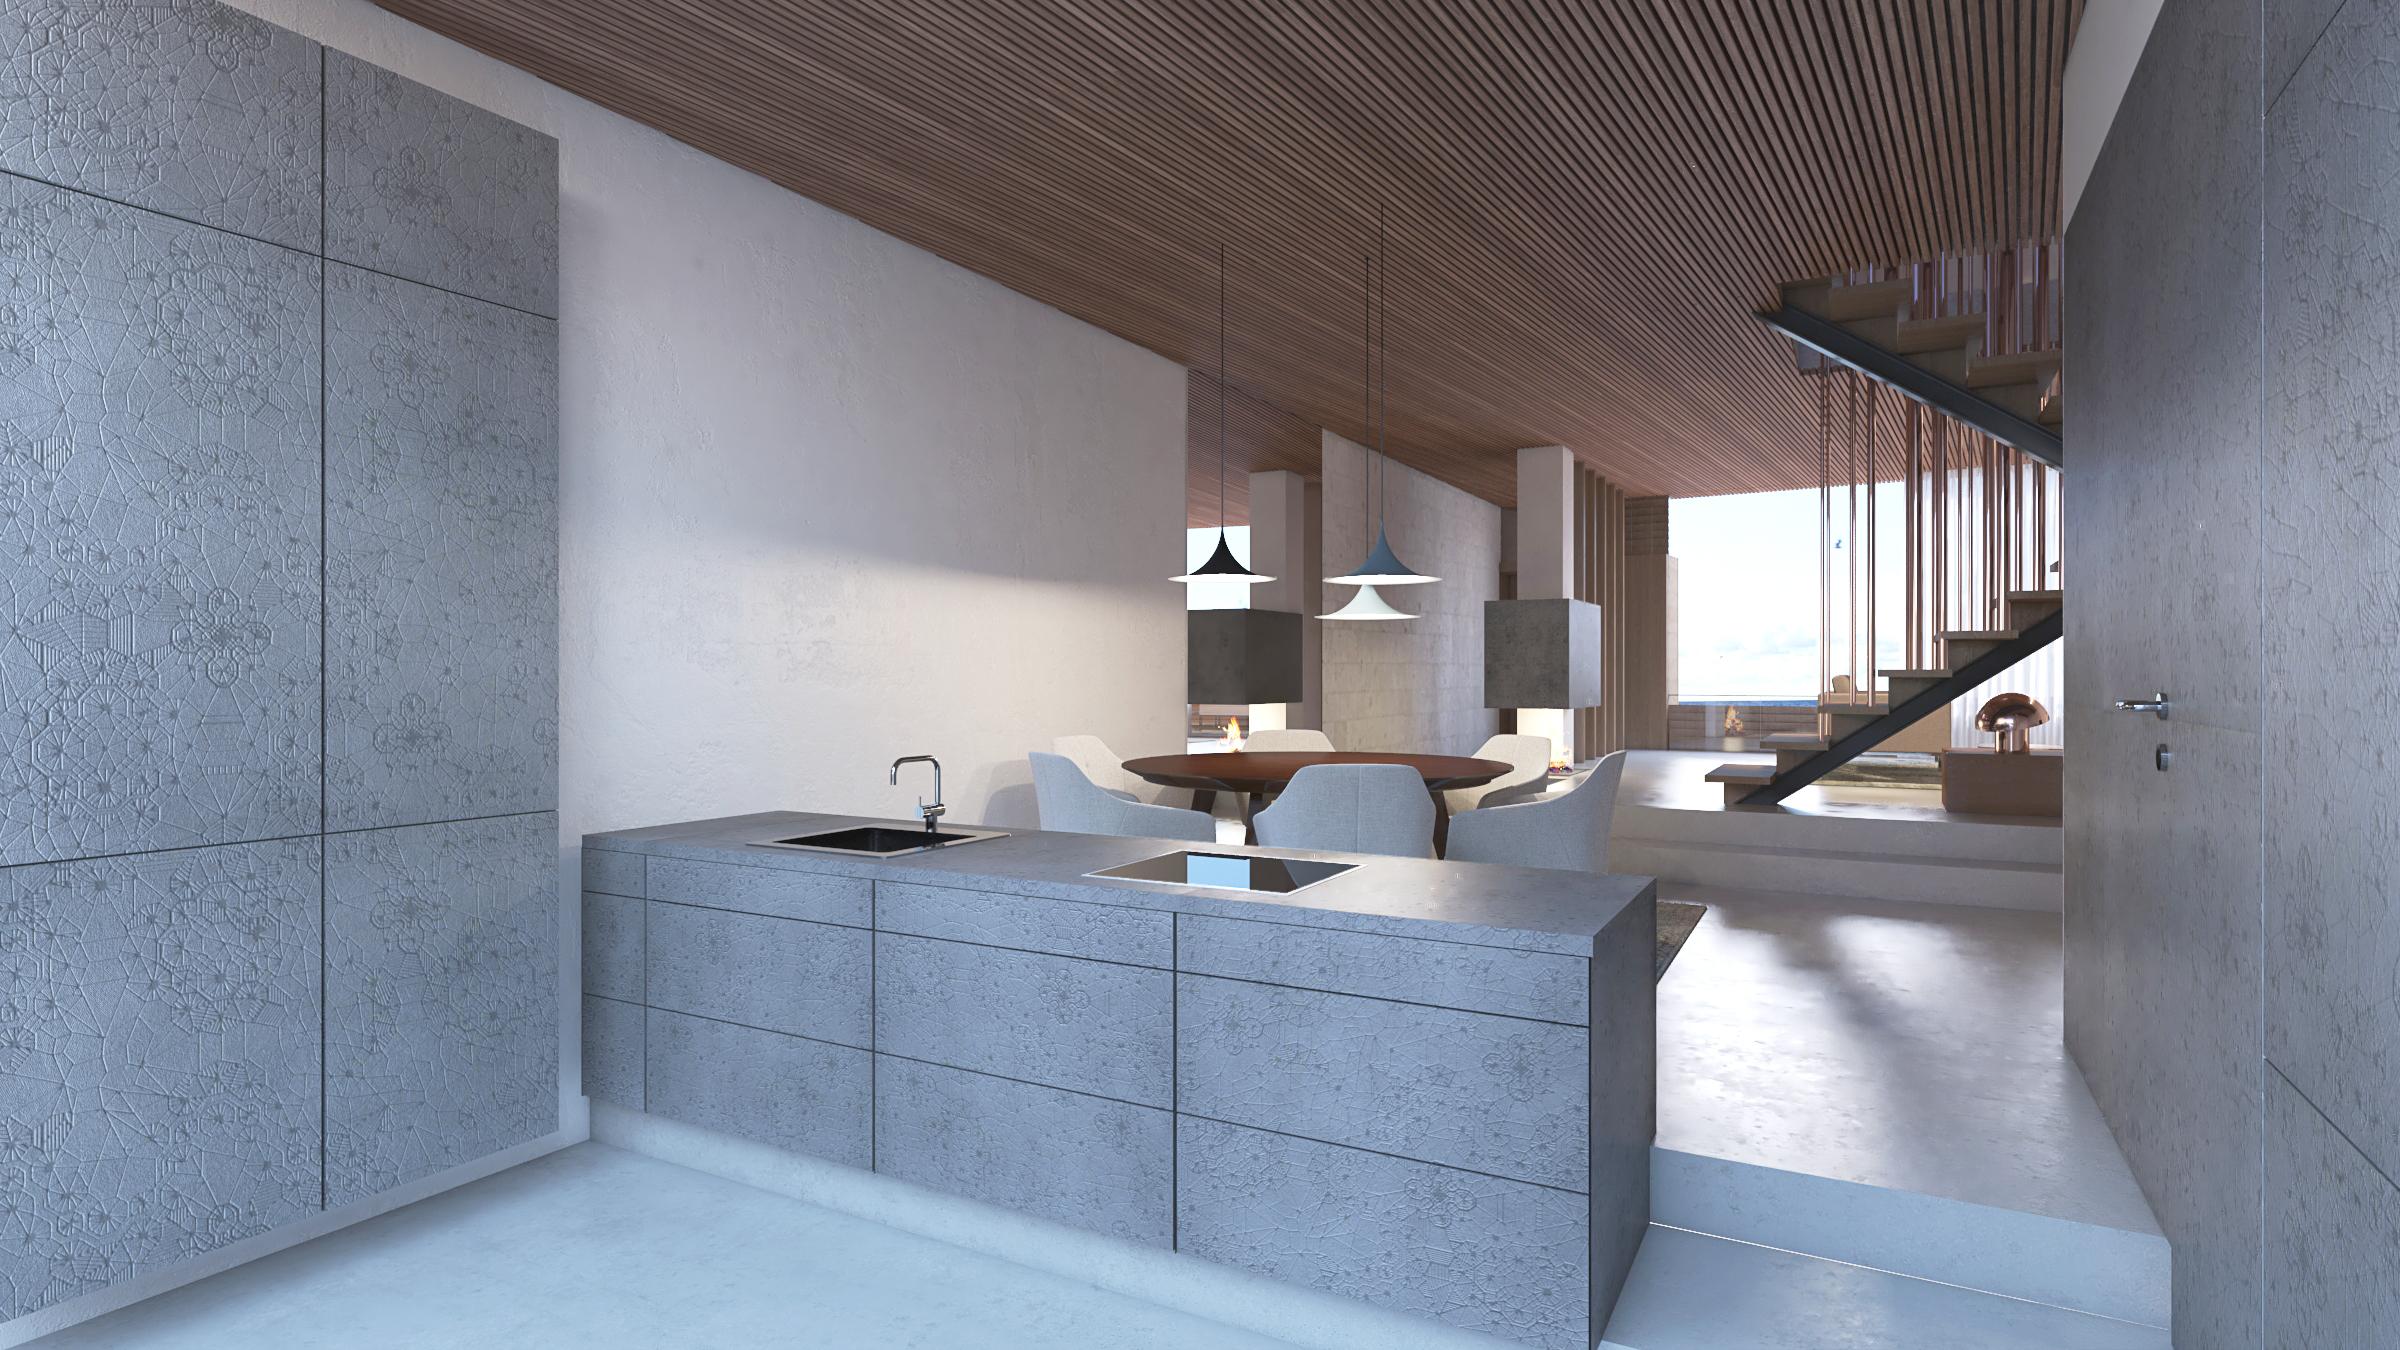 Apartment P2
Palma de Mallorca
#penthouse #innenarchitektur #interiordesign
©destilat